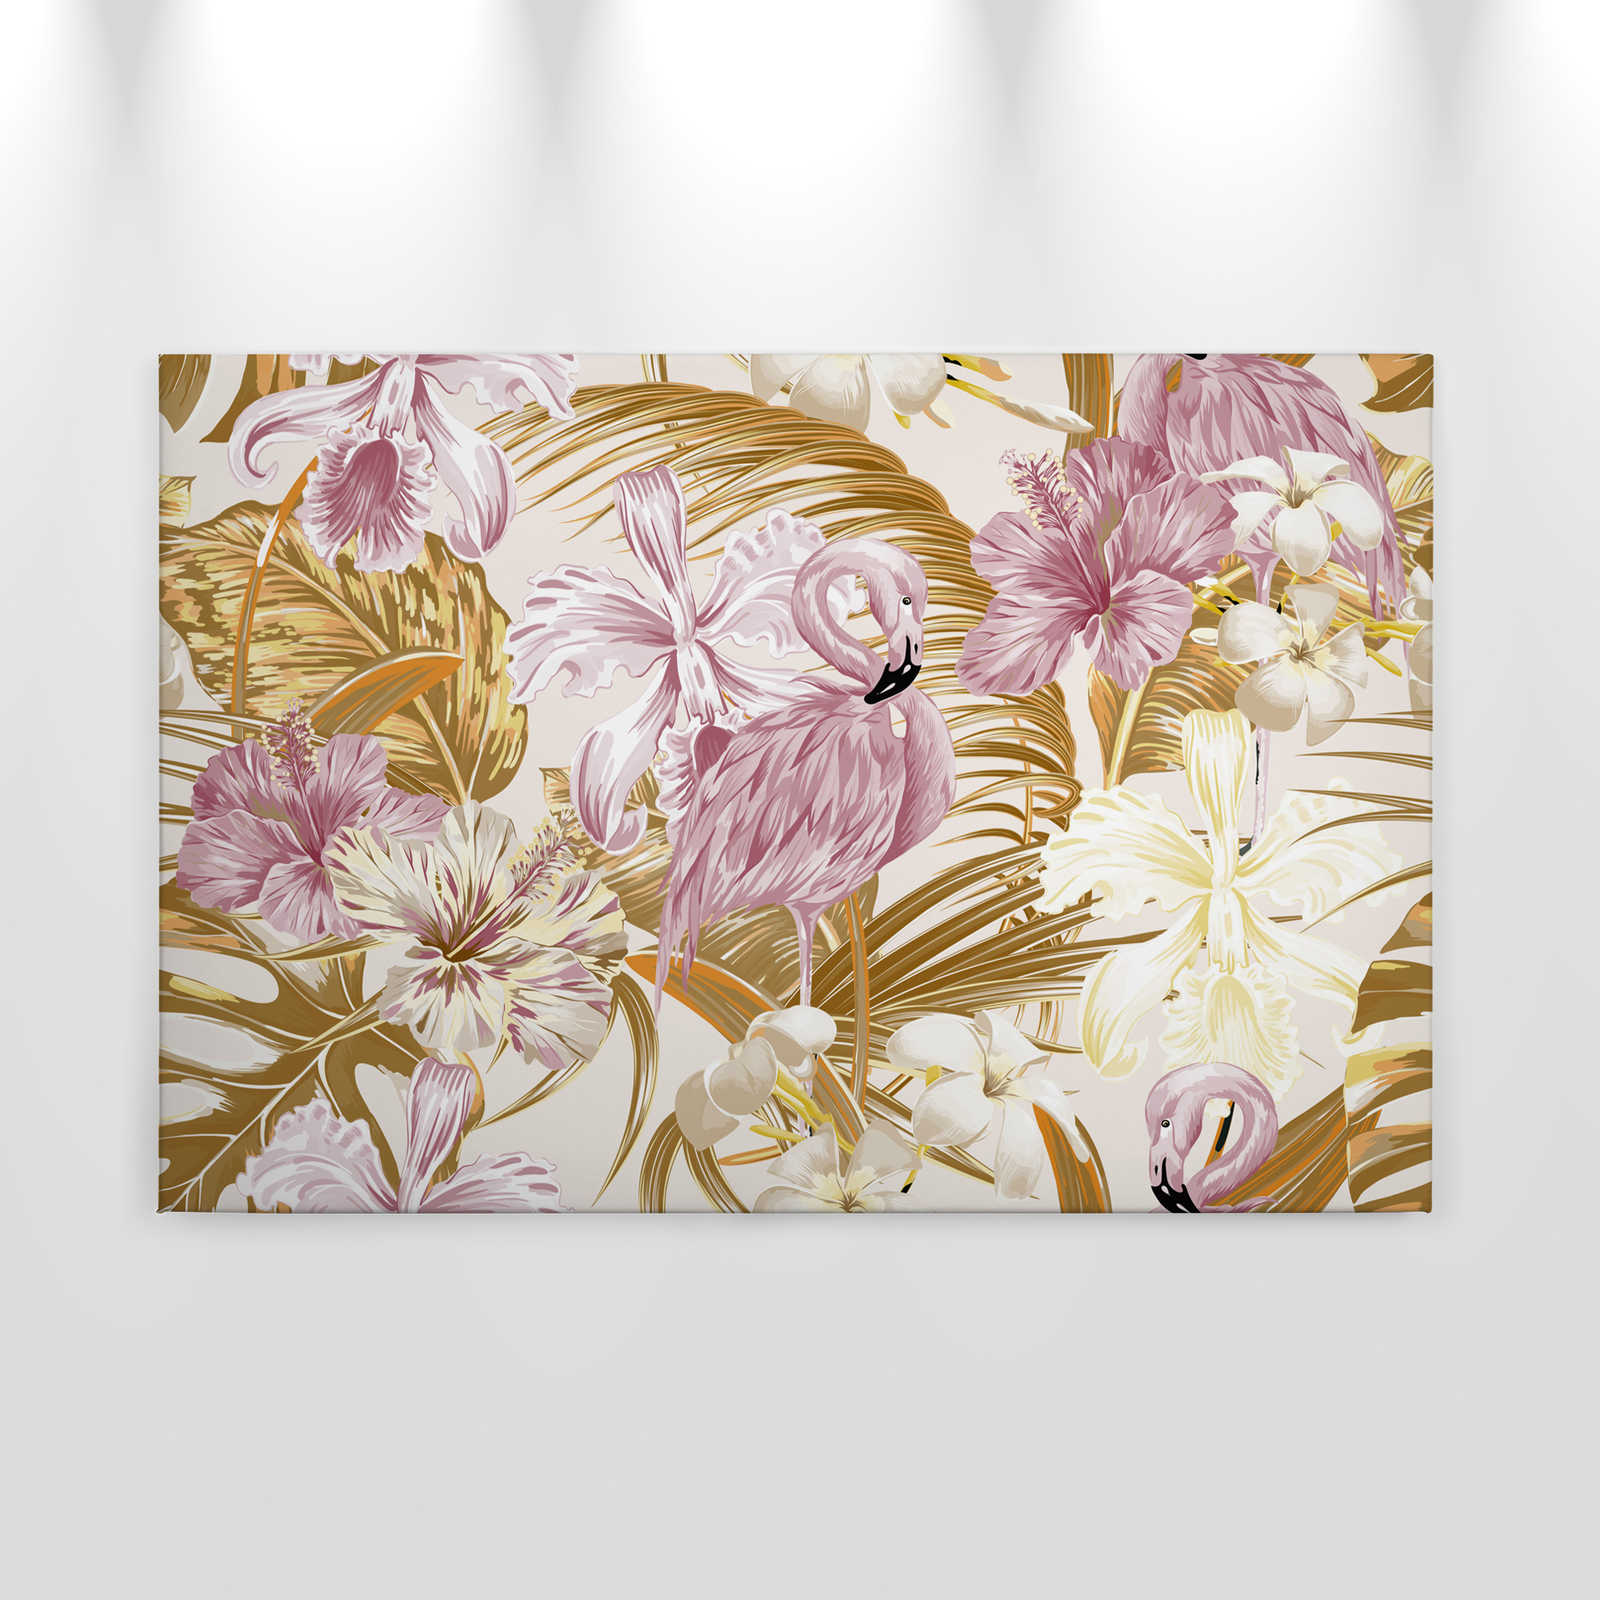             Canvas Flamingo and Tropical Plants - 0.90 m x 0.60 m
        